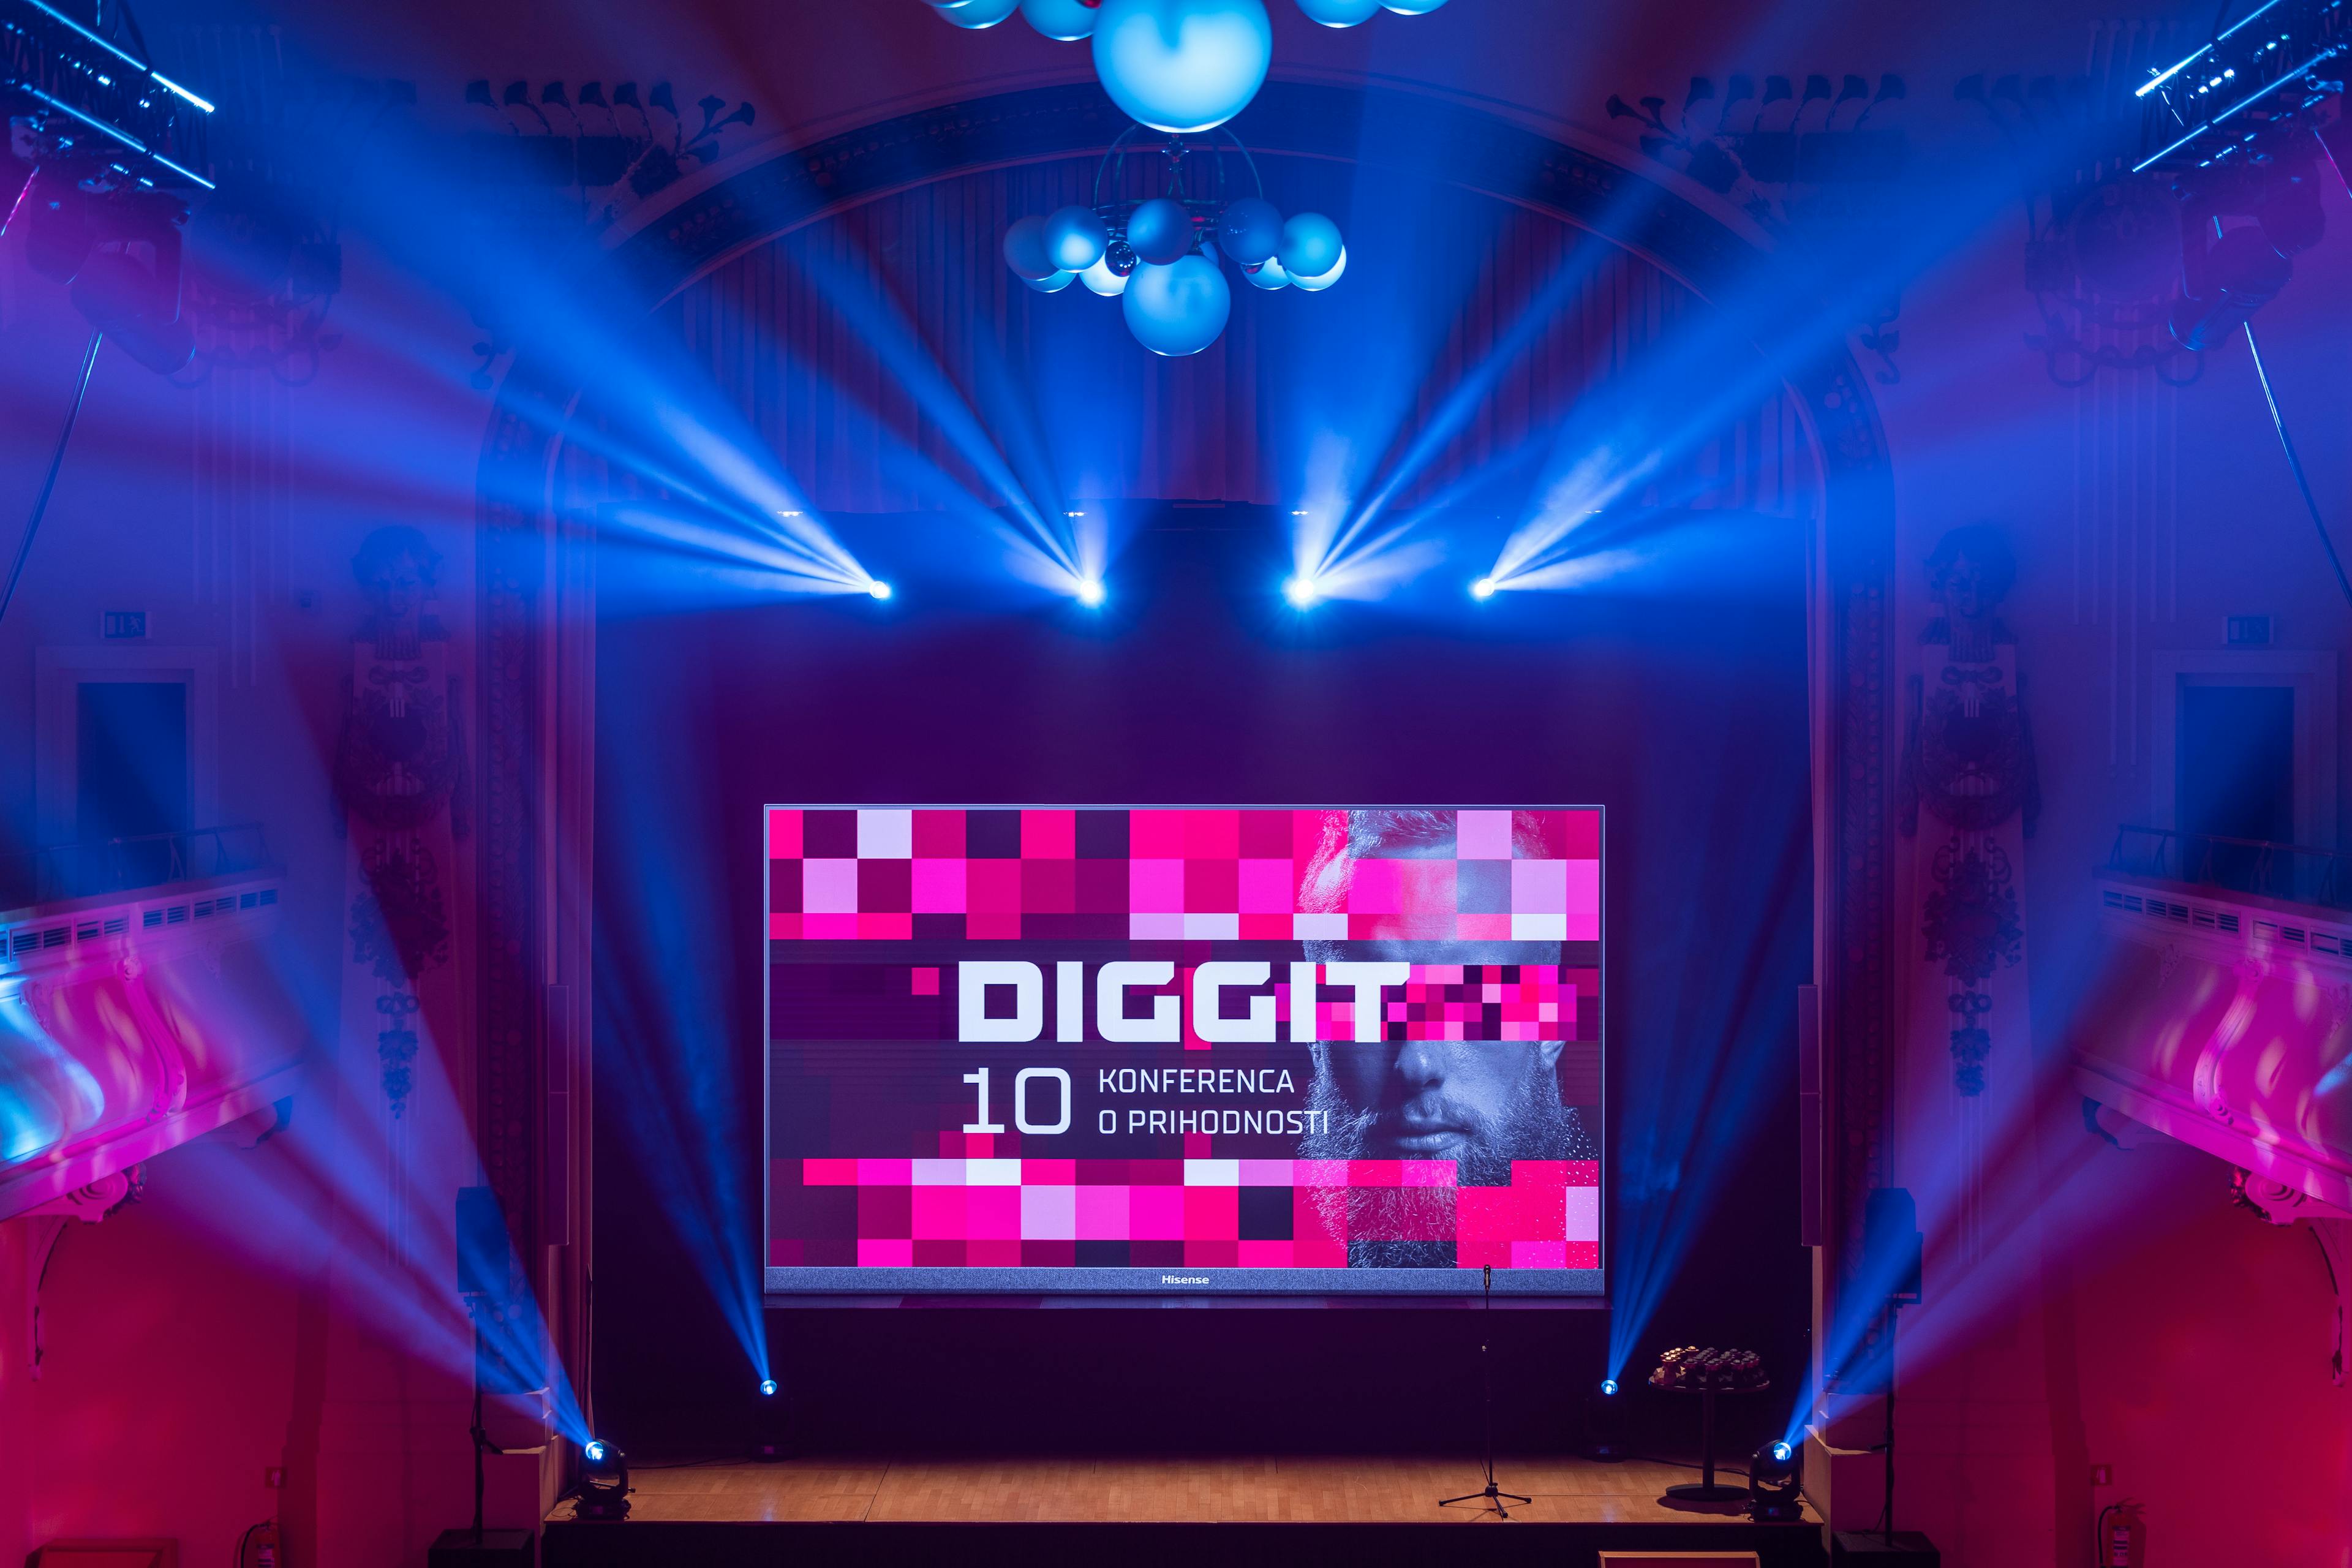 Organizacija 10. konference digitalnih trendov Diggit v Grand hotelu Union. Organizacija prireditev Paideia Events.